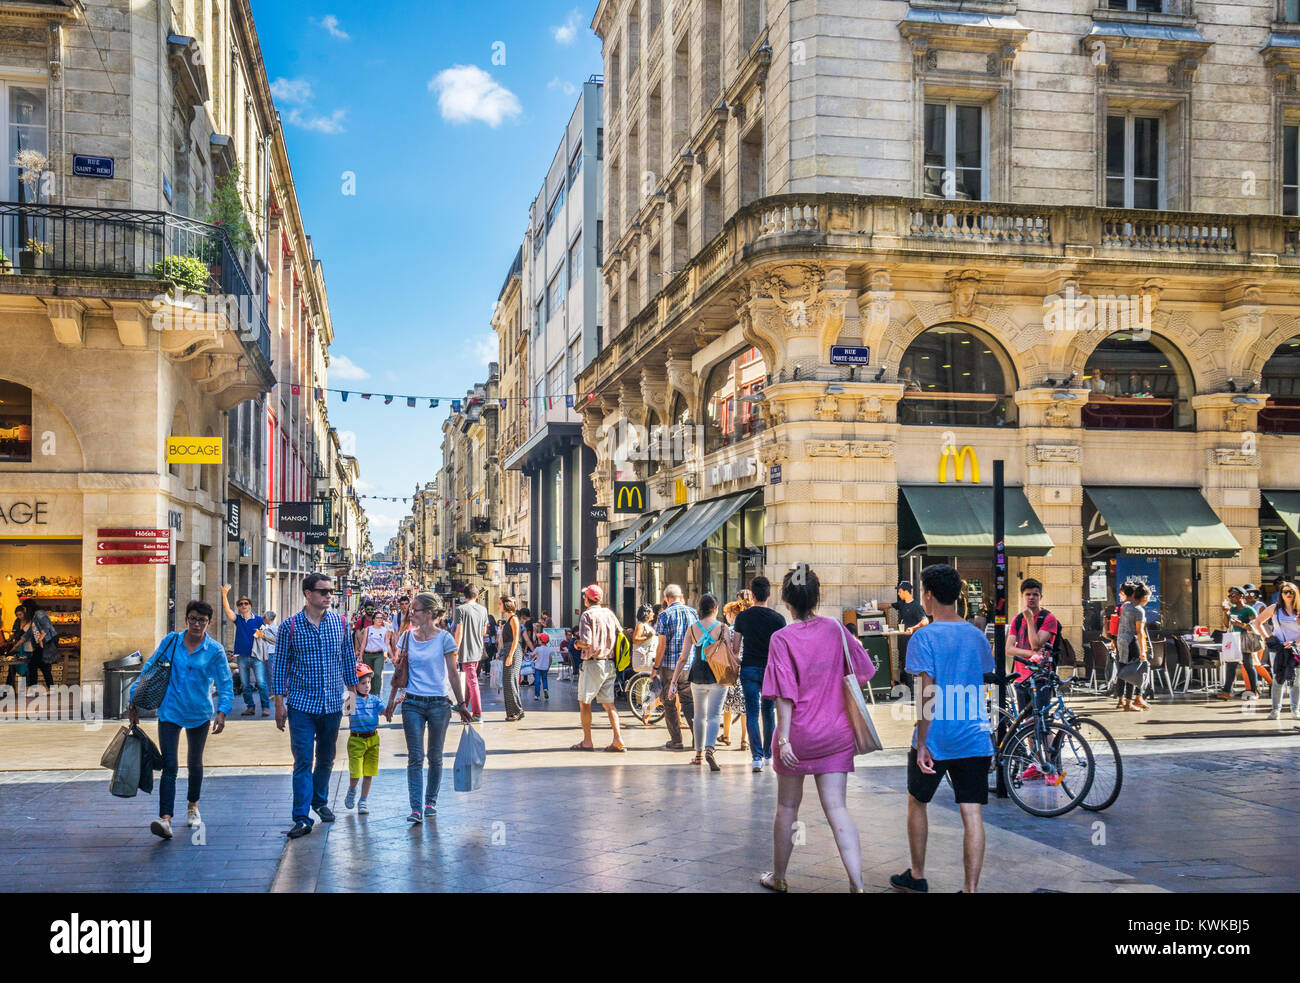 France, Gironde department, Bordeaux, Rue Sainte-Catherine and Rue Porte-Dijeaux, popular pedestrian shopping streets Stock Photo